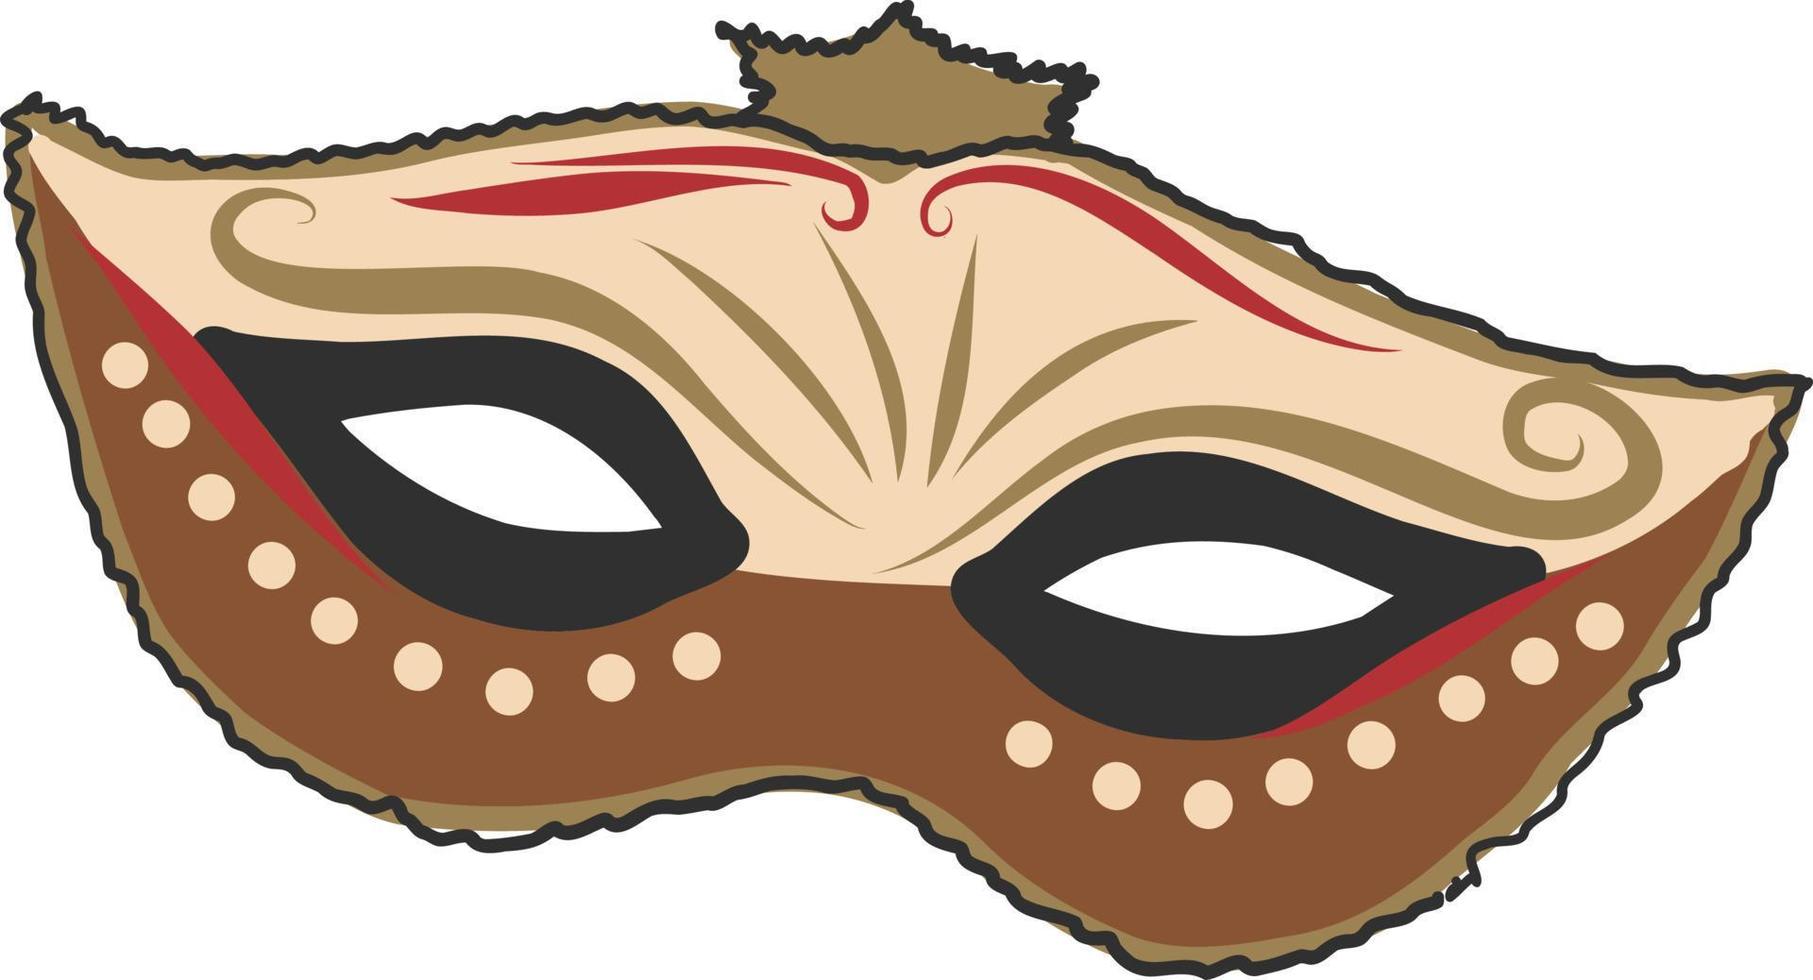 vetor de doodle de máscara facial de carnaval italiano. carnavais venezianos ou mardi gras tradicionais, baile de máscaras de férias, ilustração de parte de vestir de festa fantasiada. elemento de design de conceito de mistério e segredo.